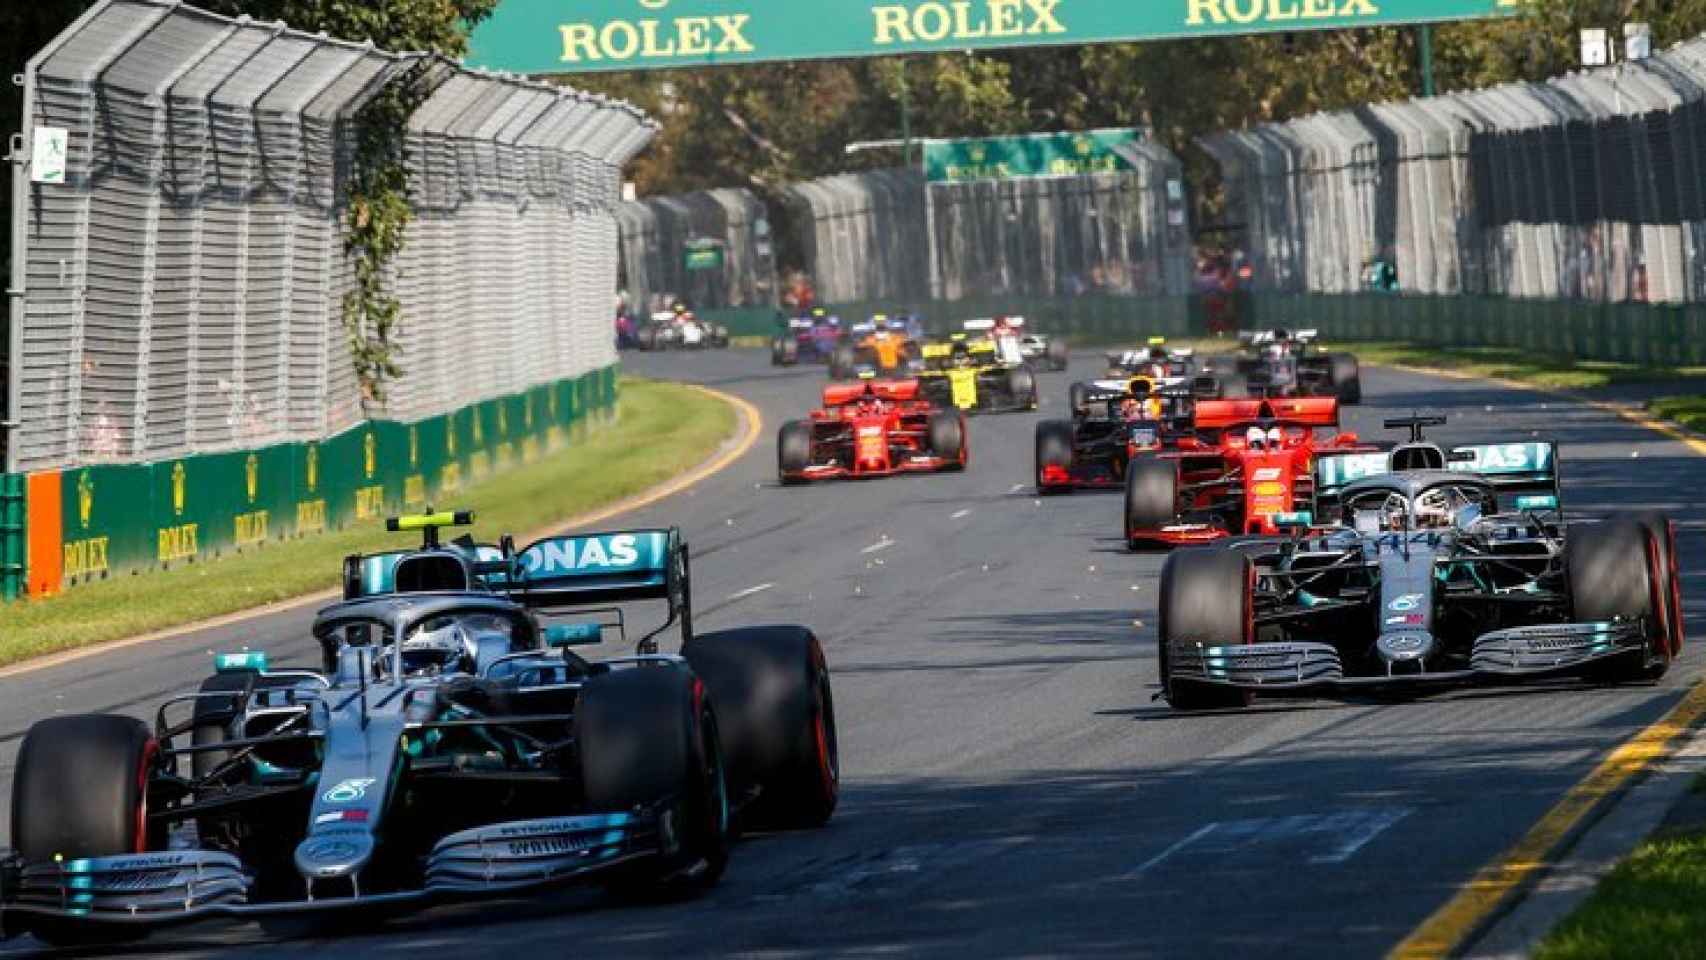 El Gran Premio de Australia de Fórmula 1de 2019